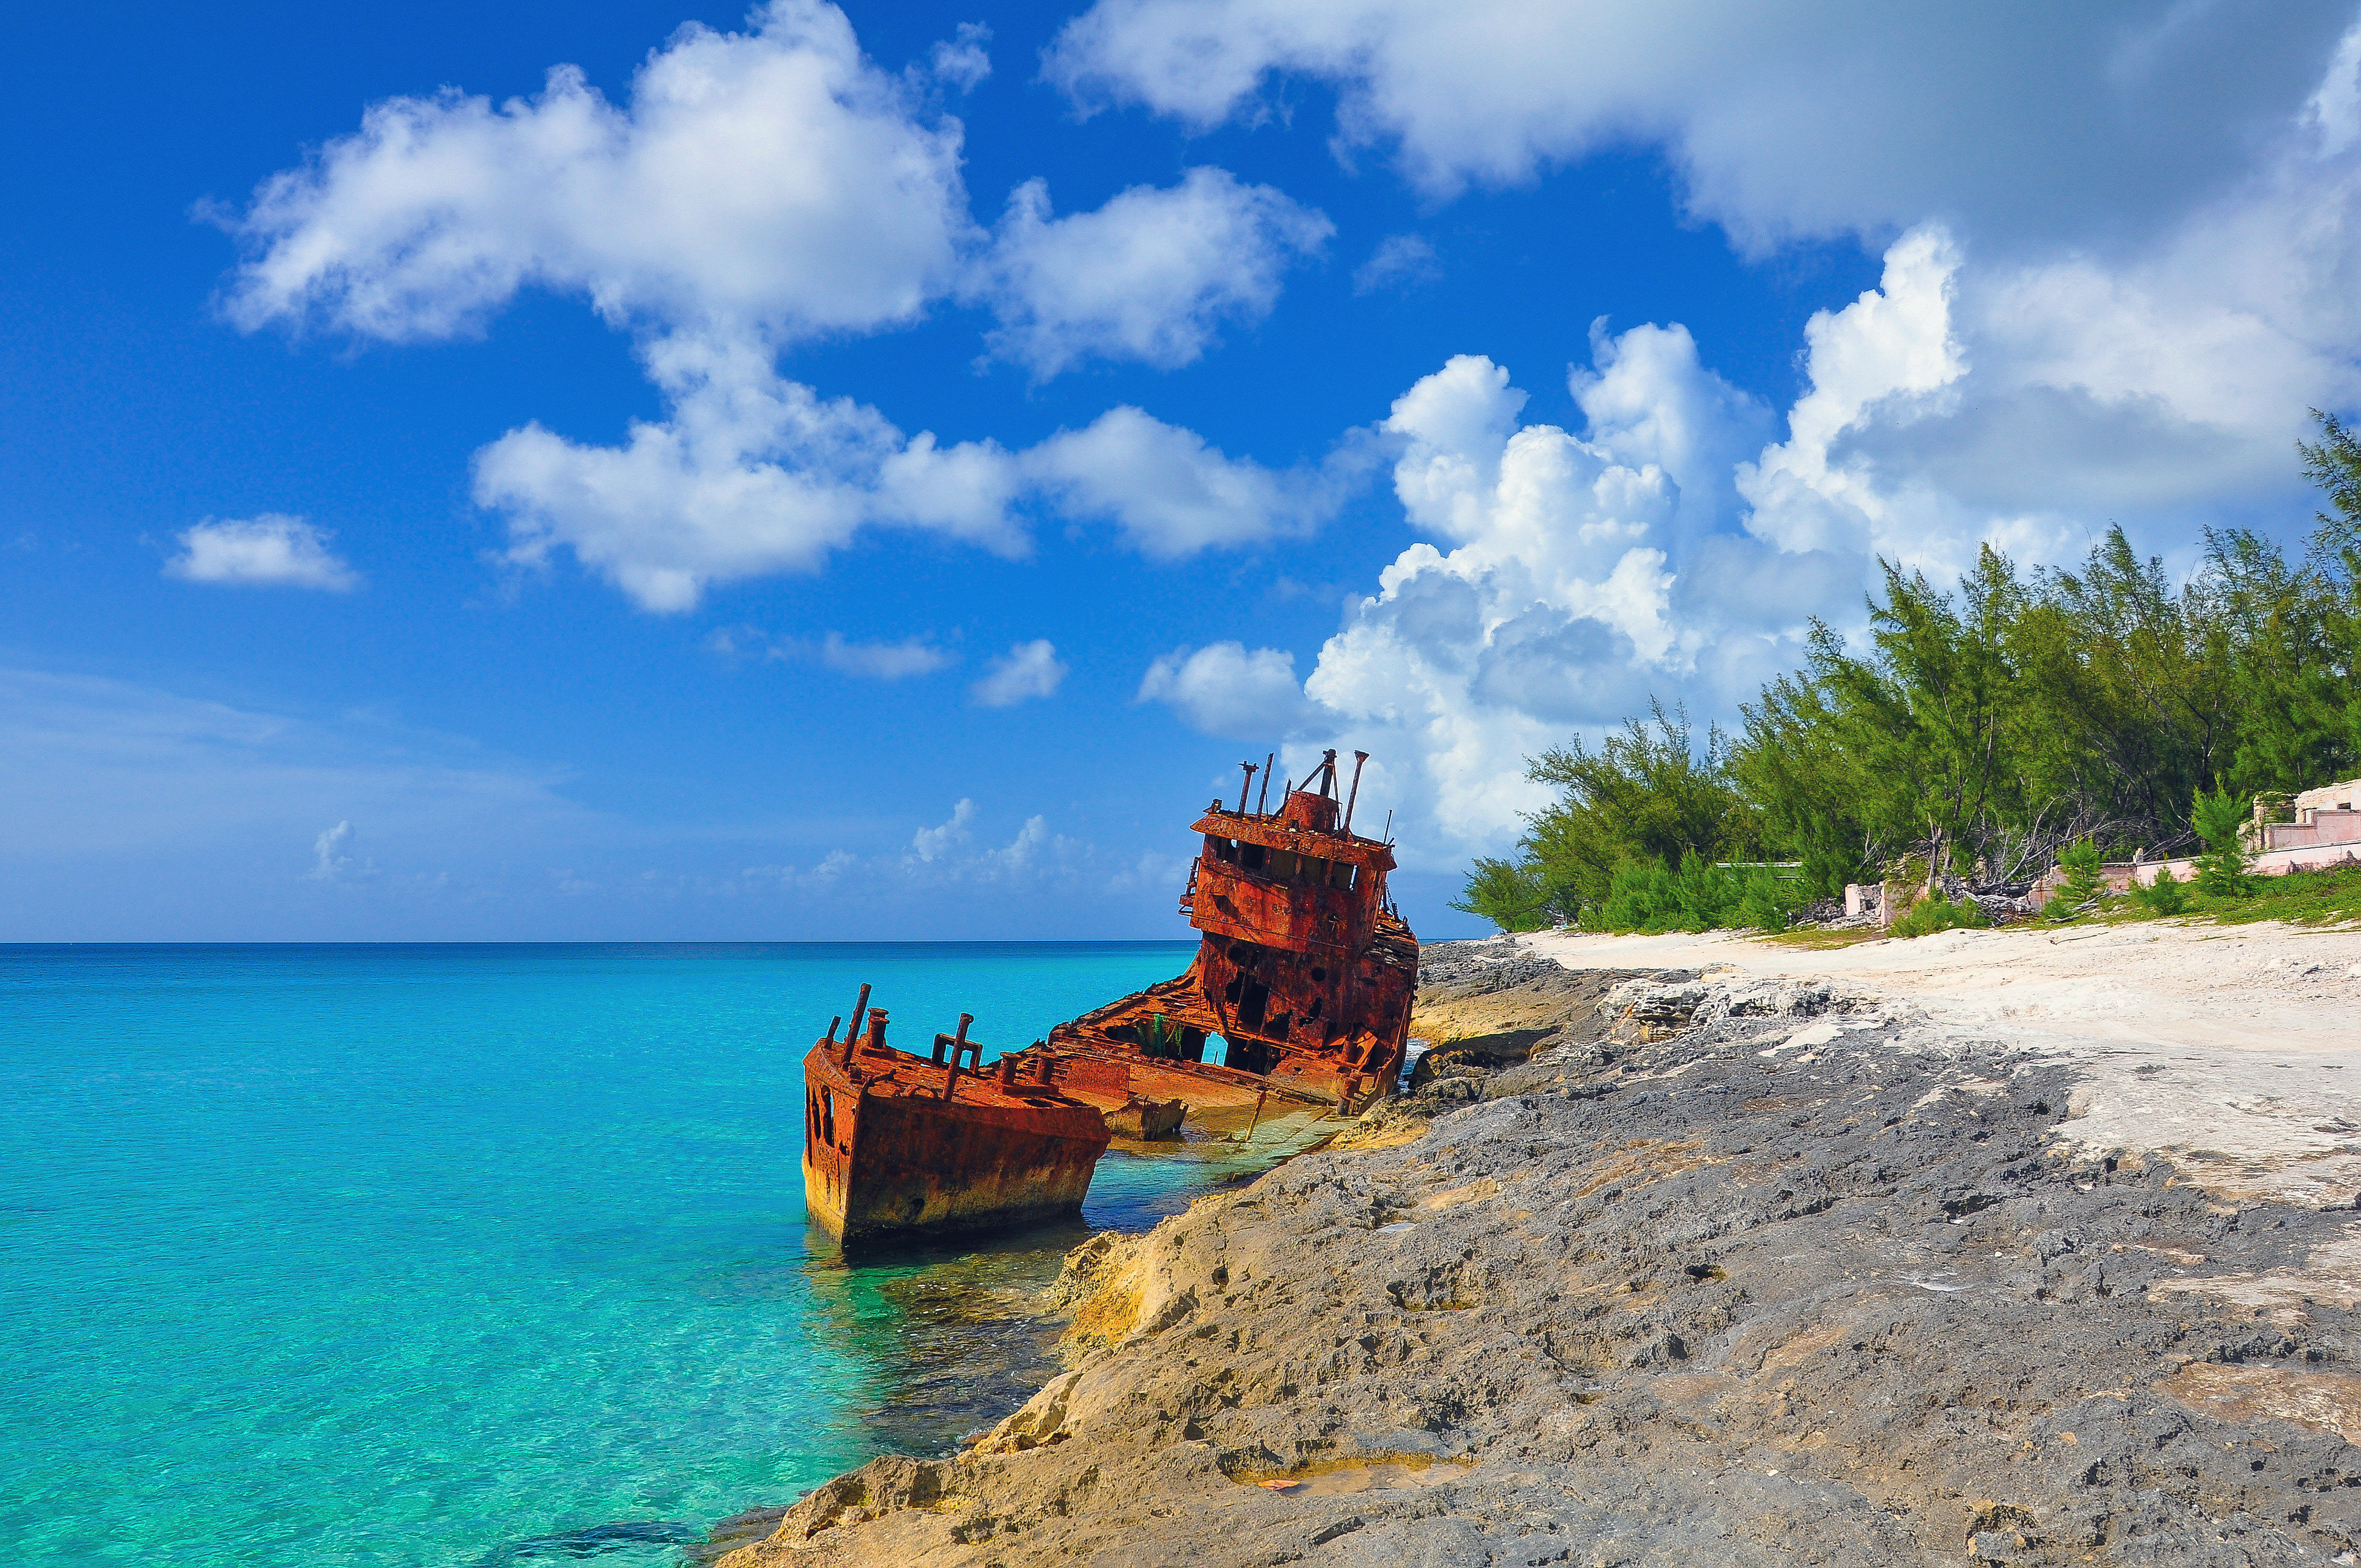 Shipwreck in Bimini, Bahamas